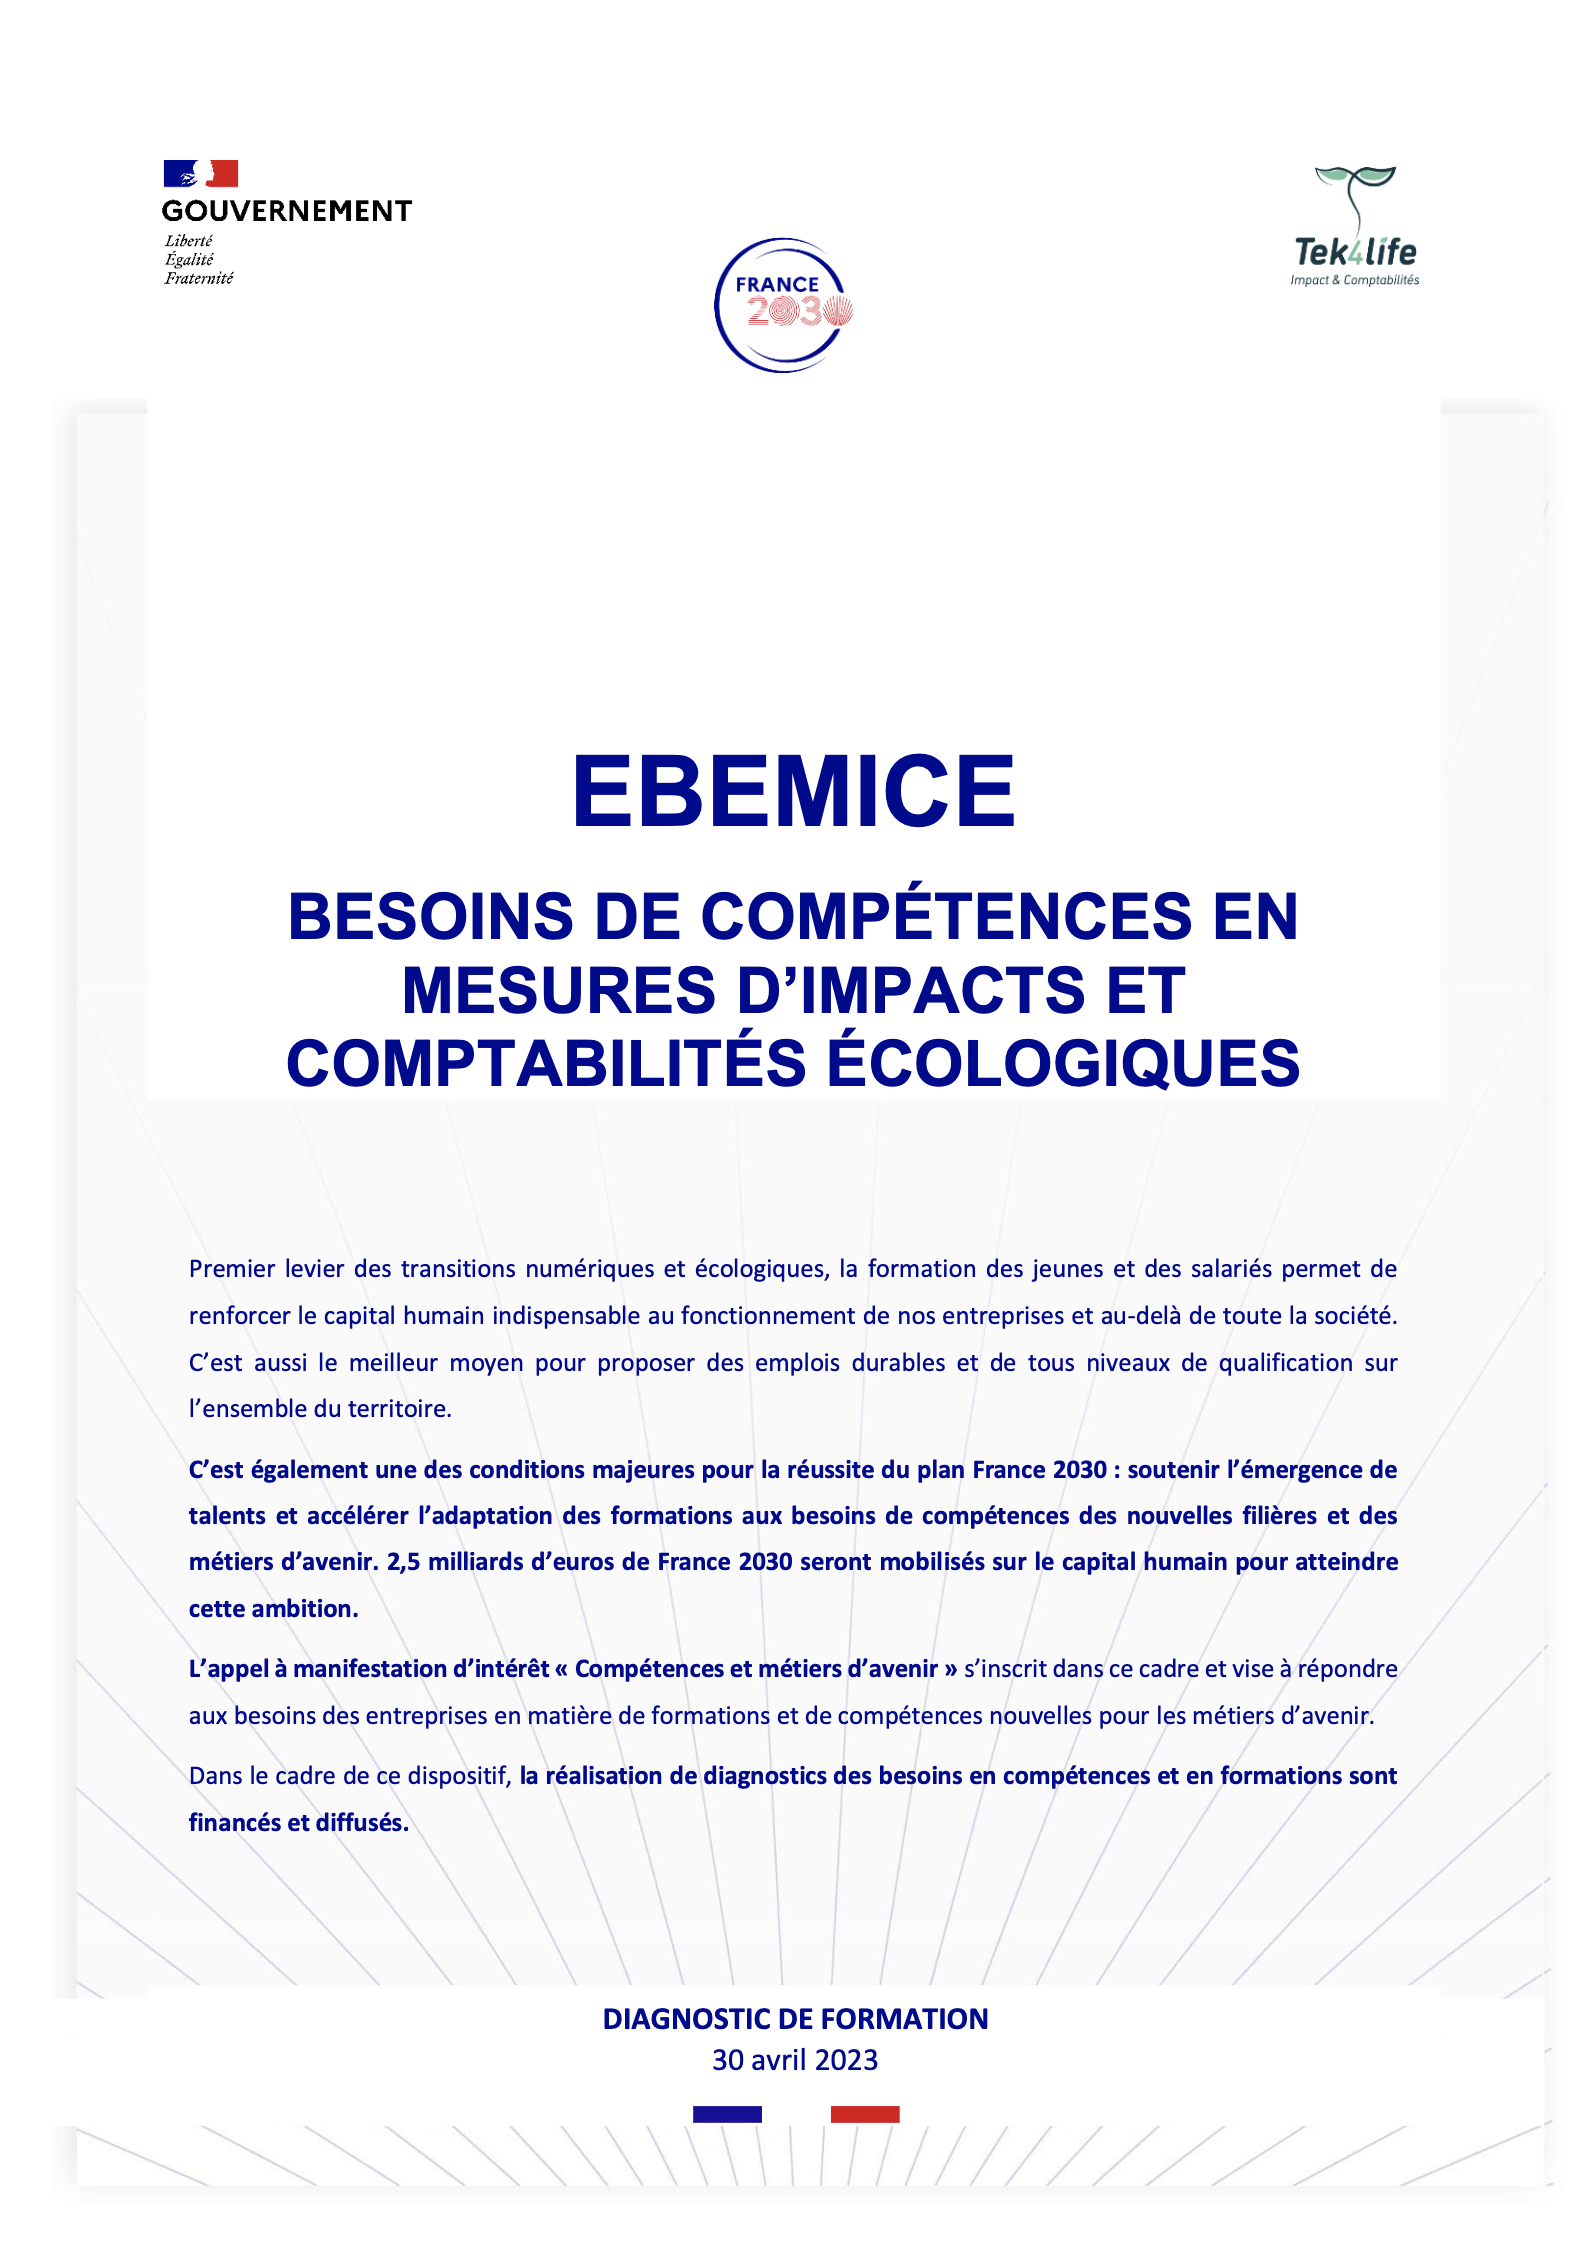 Ebemice-France 2030